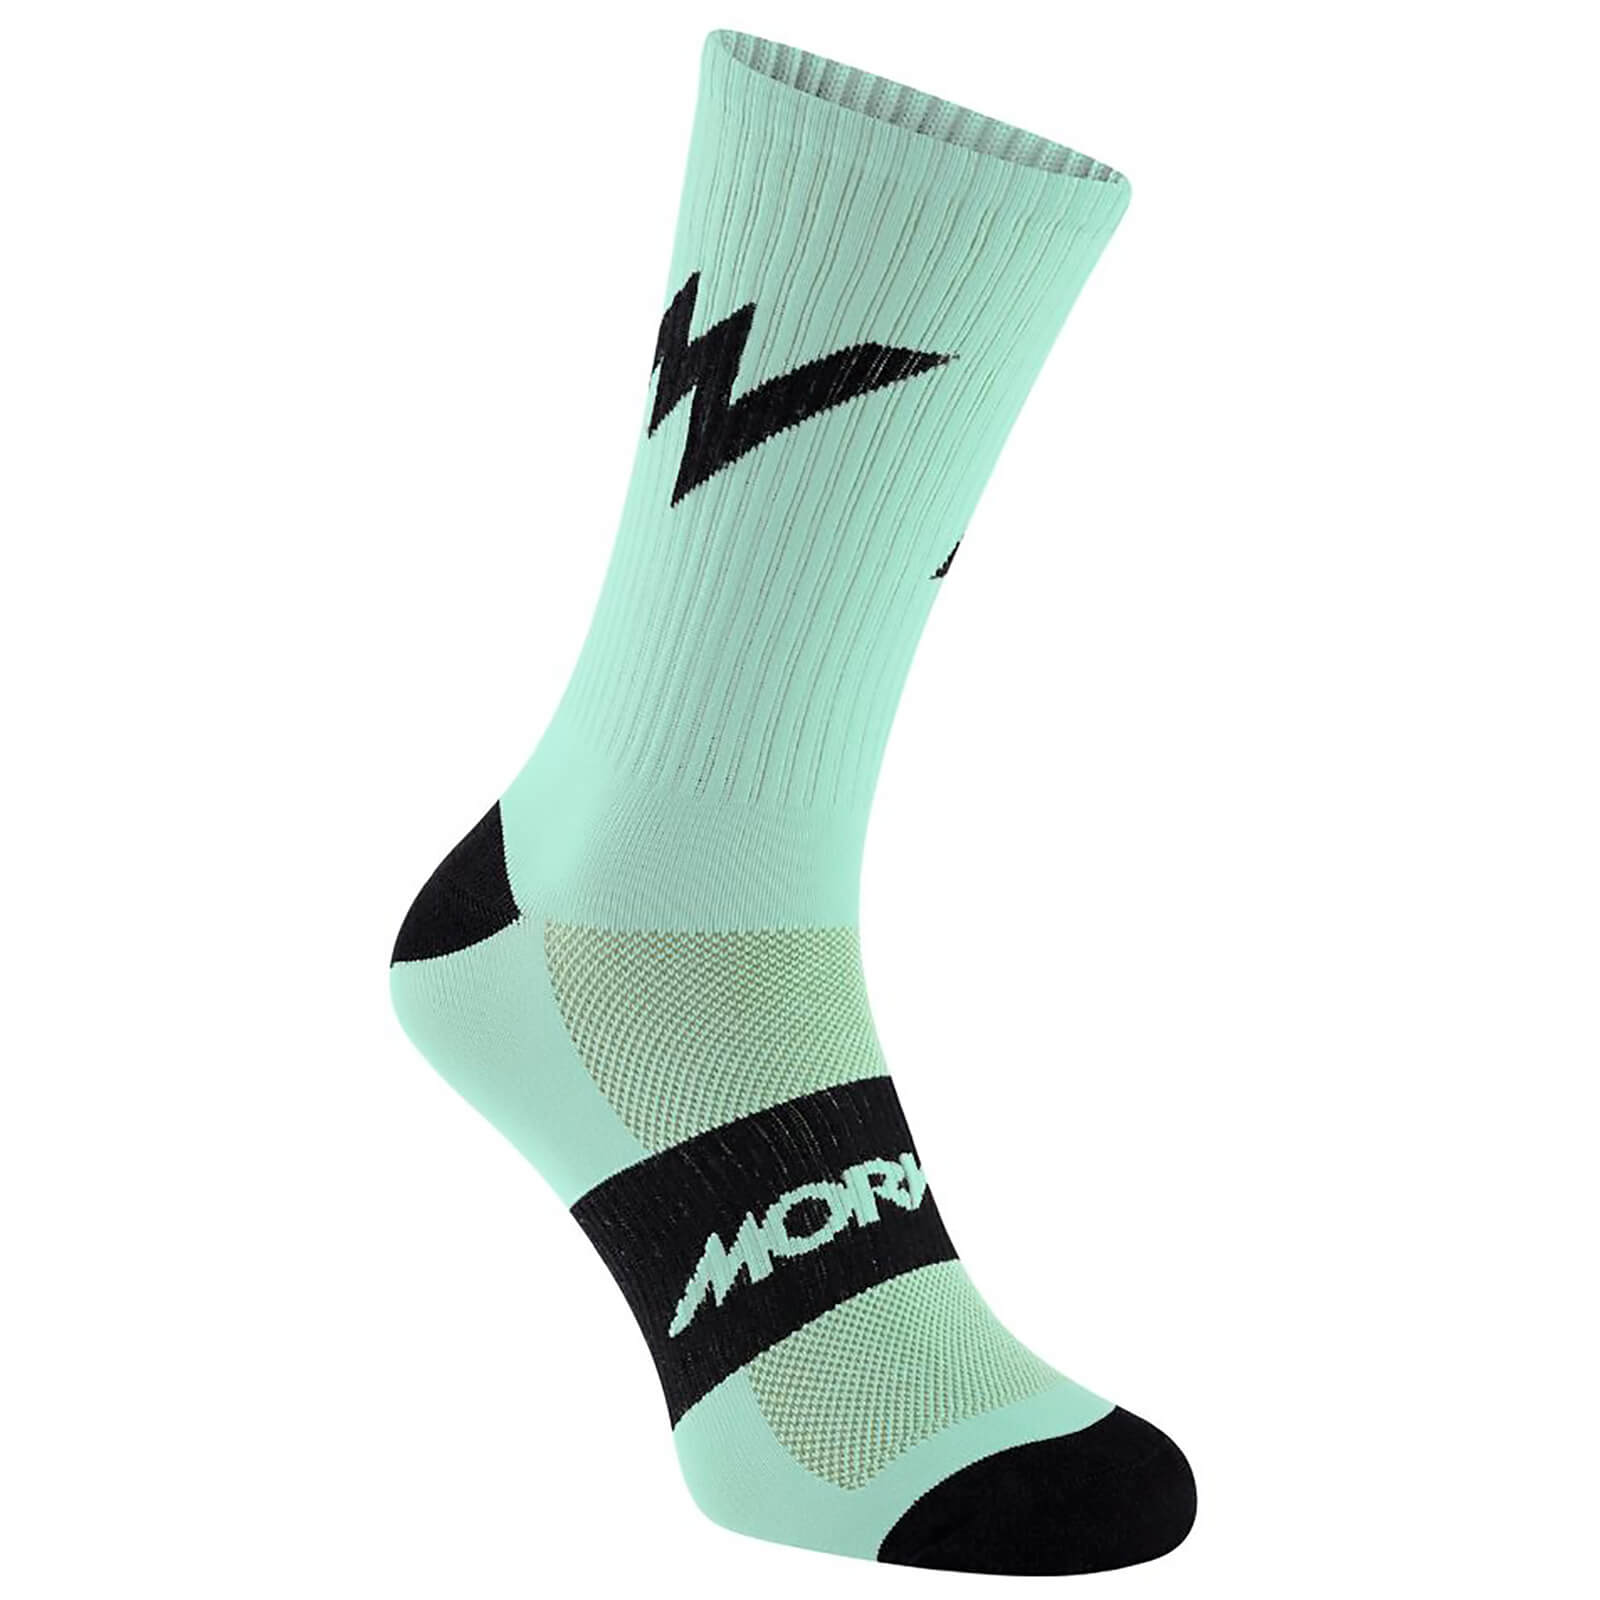 Morvelo Series Emblem Celeste Socks - L/XL